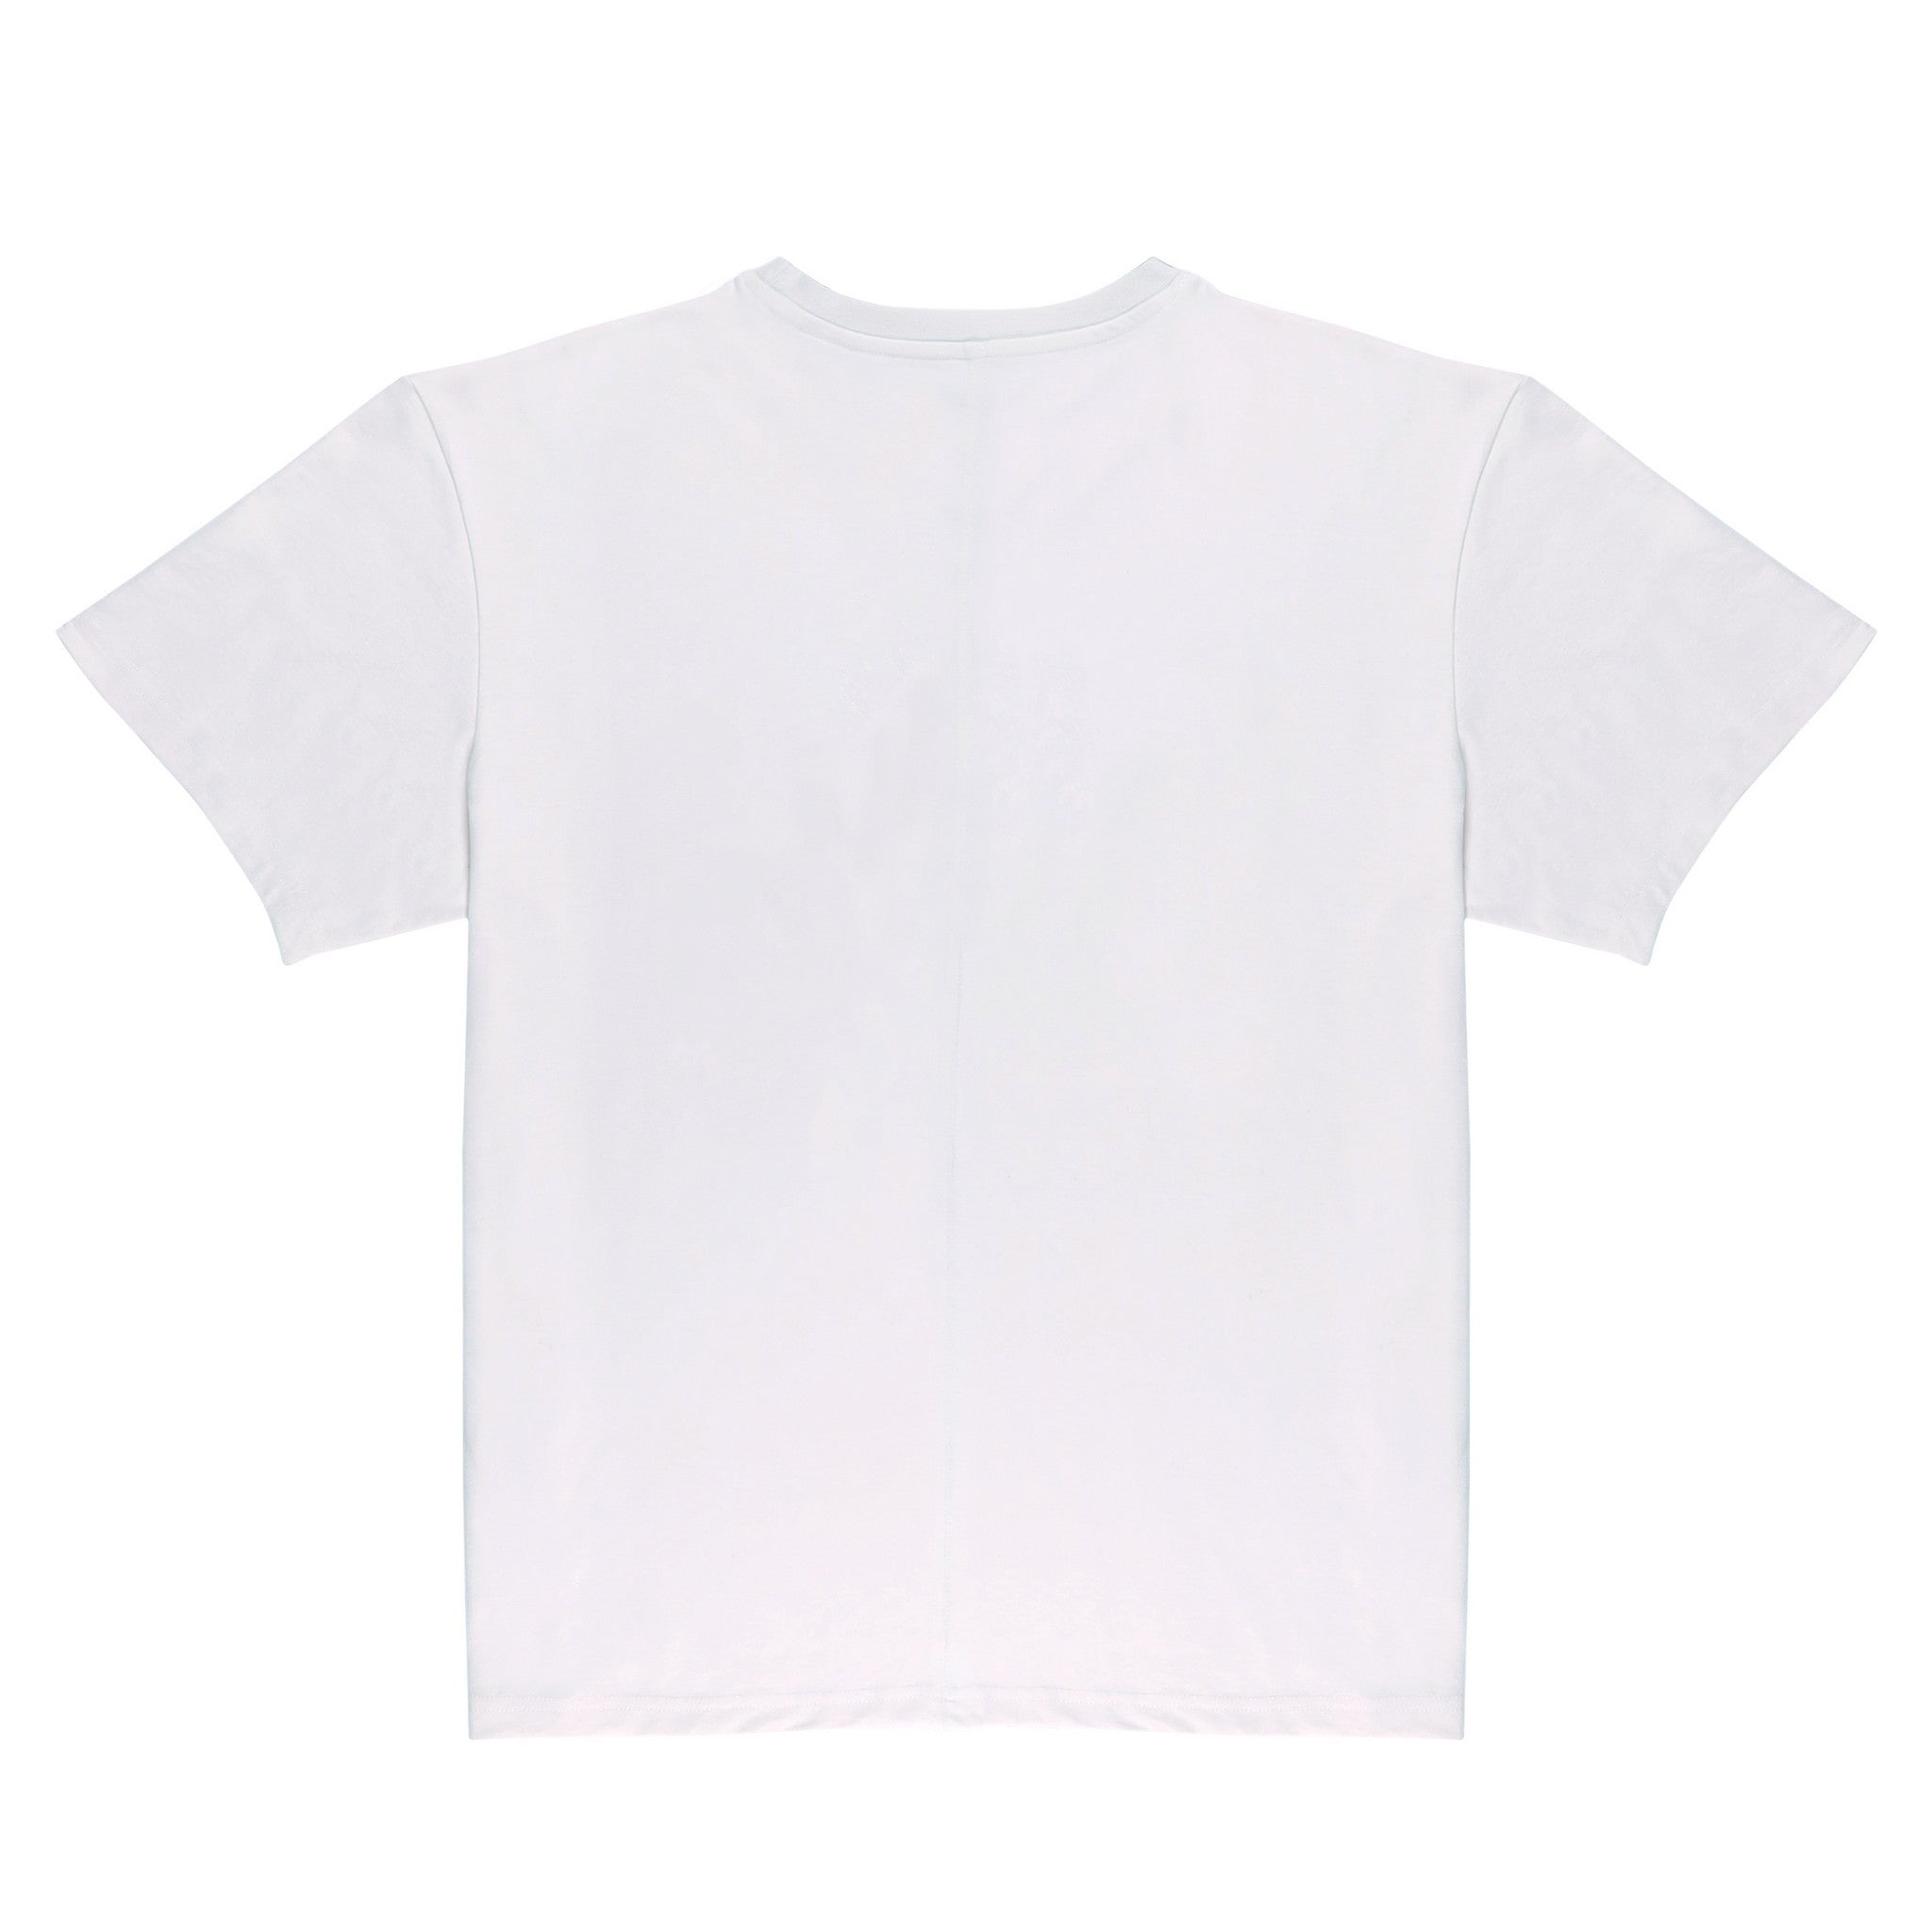 Be Inspired Print Oversize White T-Shirt